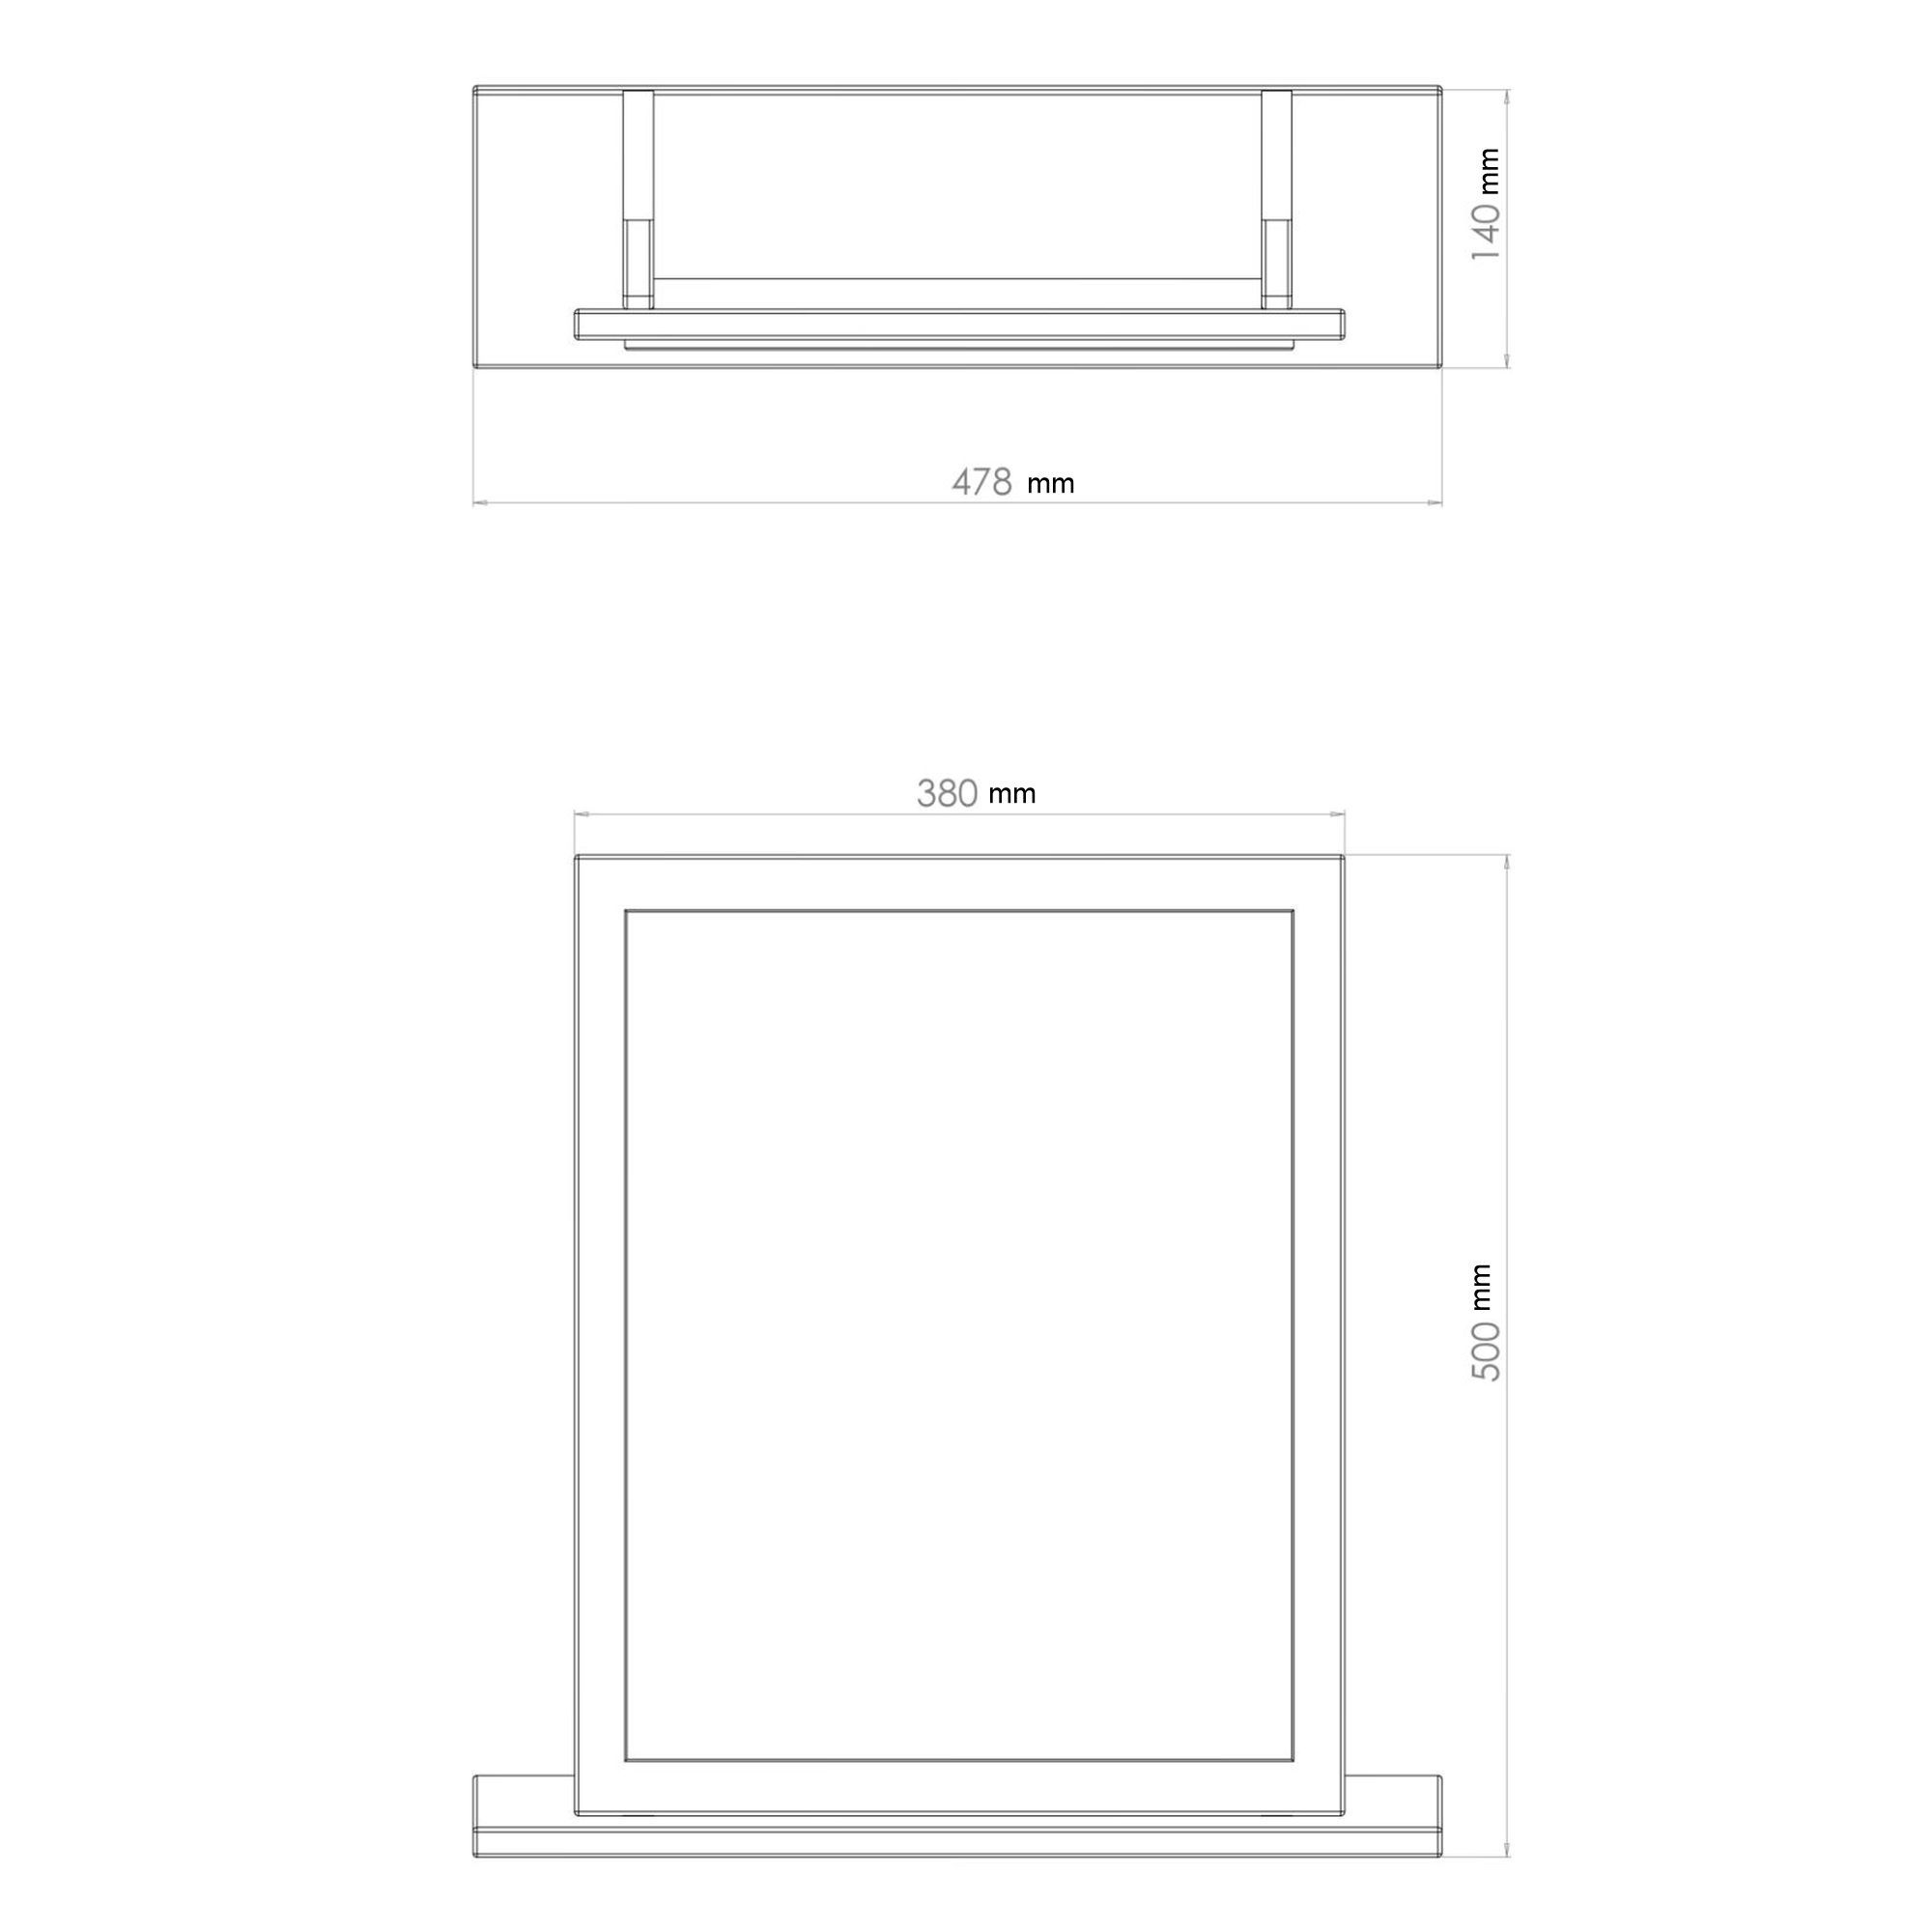 Linear Grey Rectangular Freestanding Framed mirror, (H)50.5cm (W)48cm